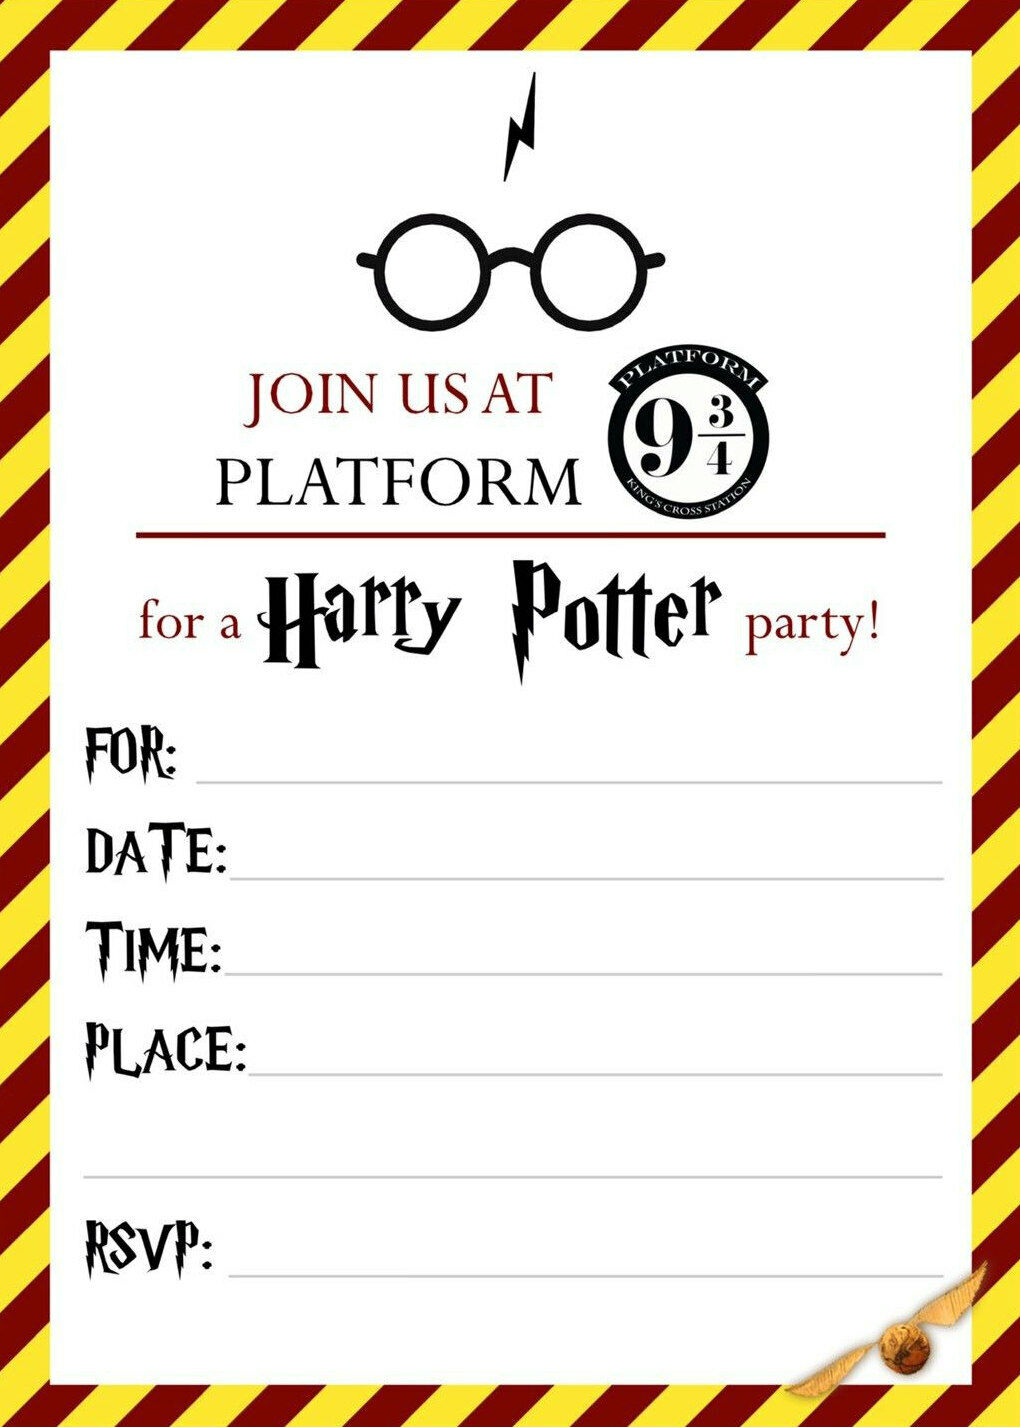 Harry Potter Birthday Party Invitations x 10 c/w Envelopes